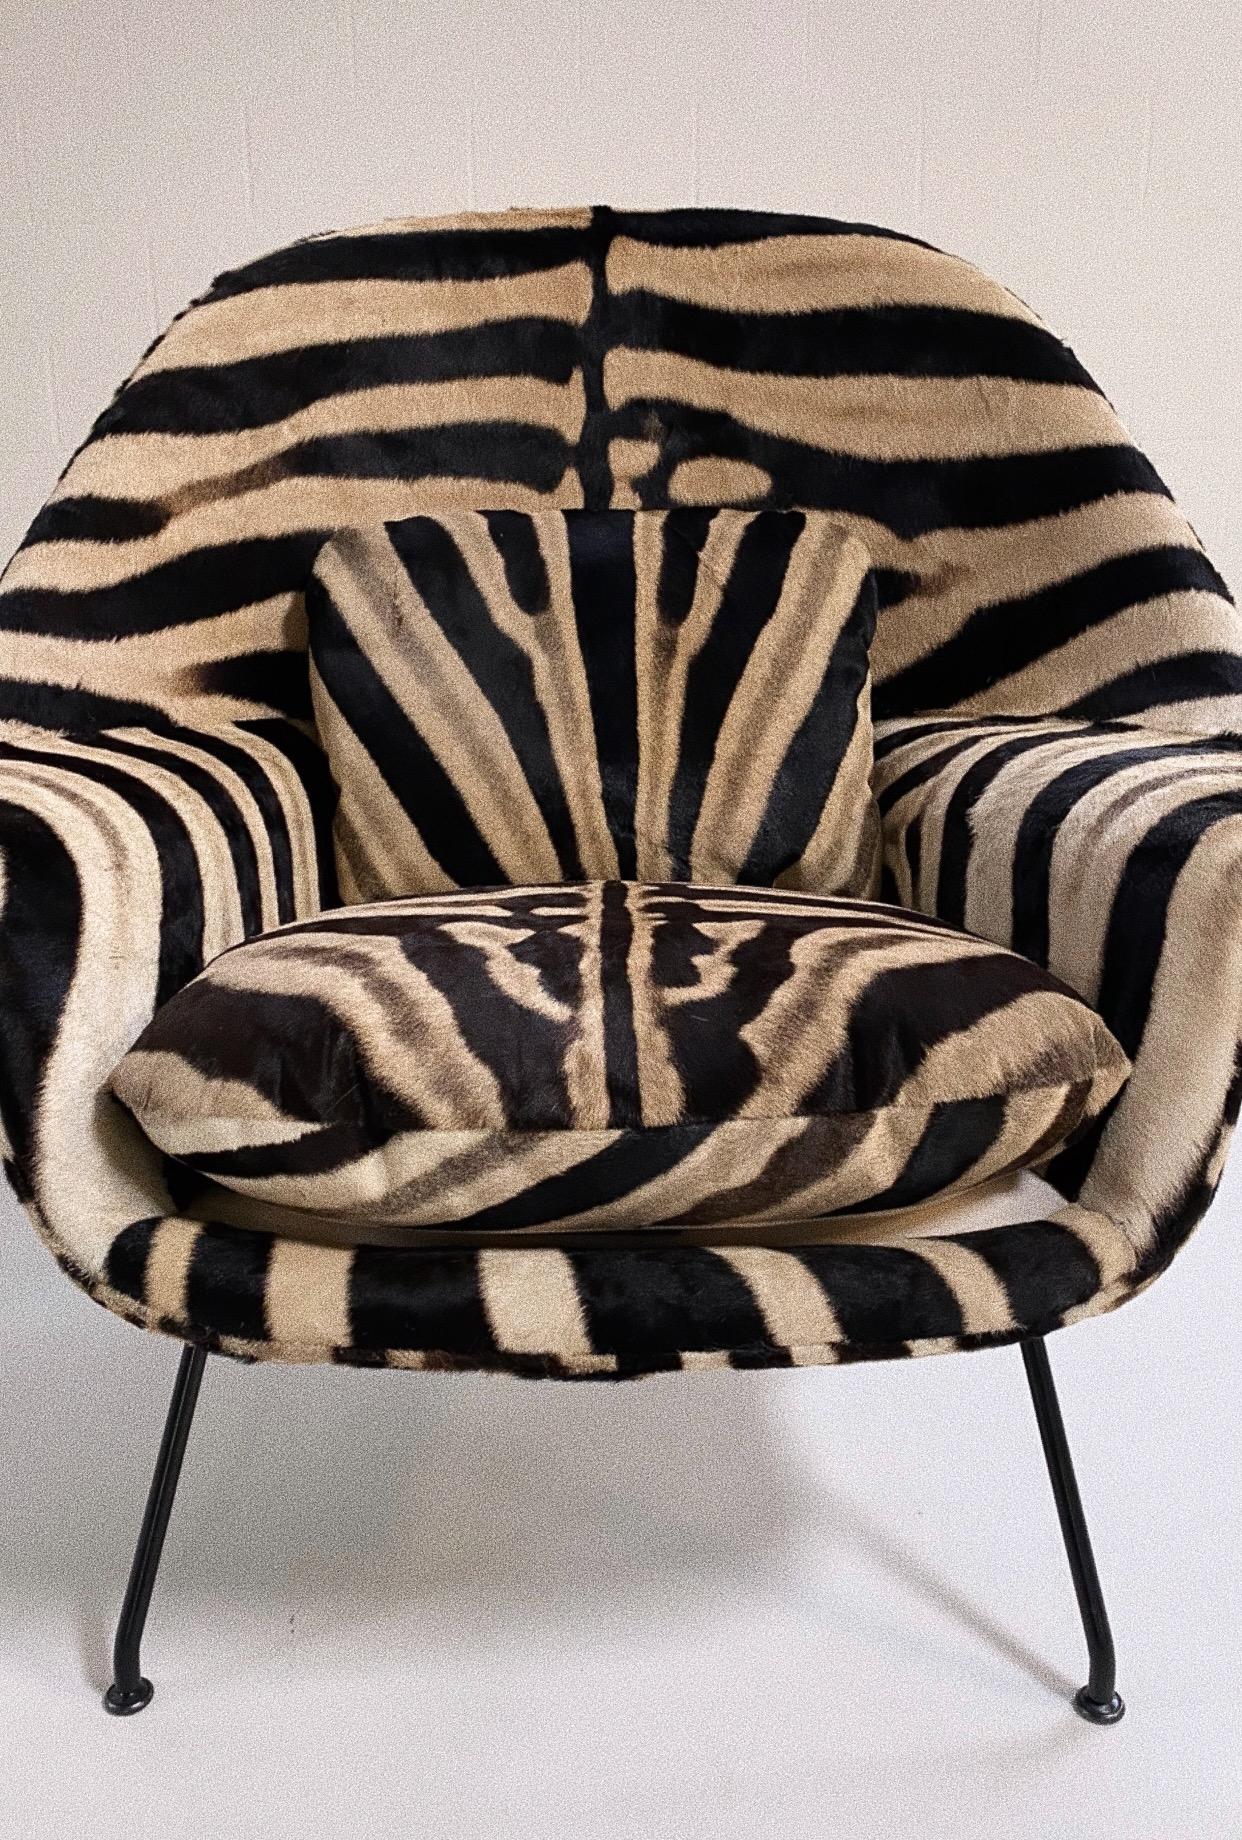 Forsyth Bespoke Eero Saarinen Womb Chair and Ottoman in Zebra For Sale 6